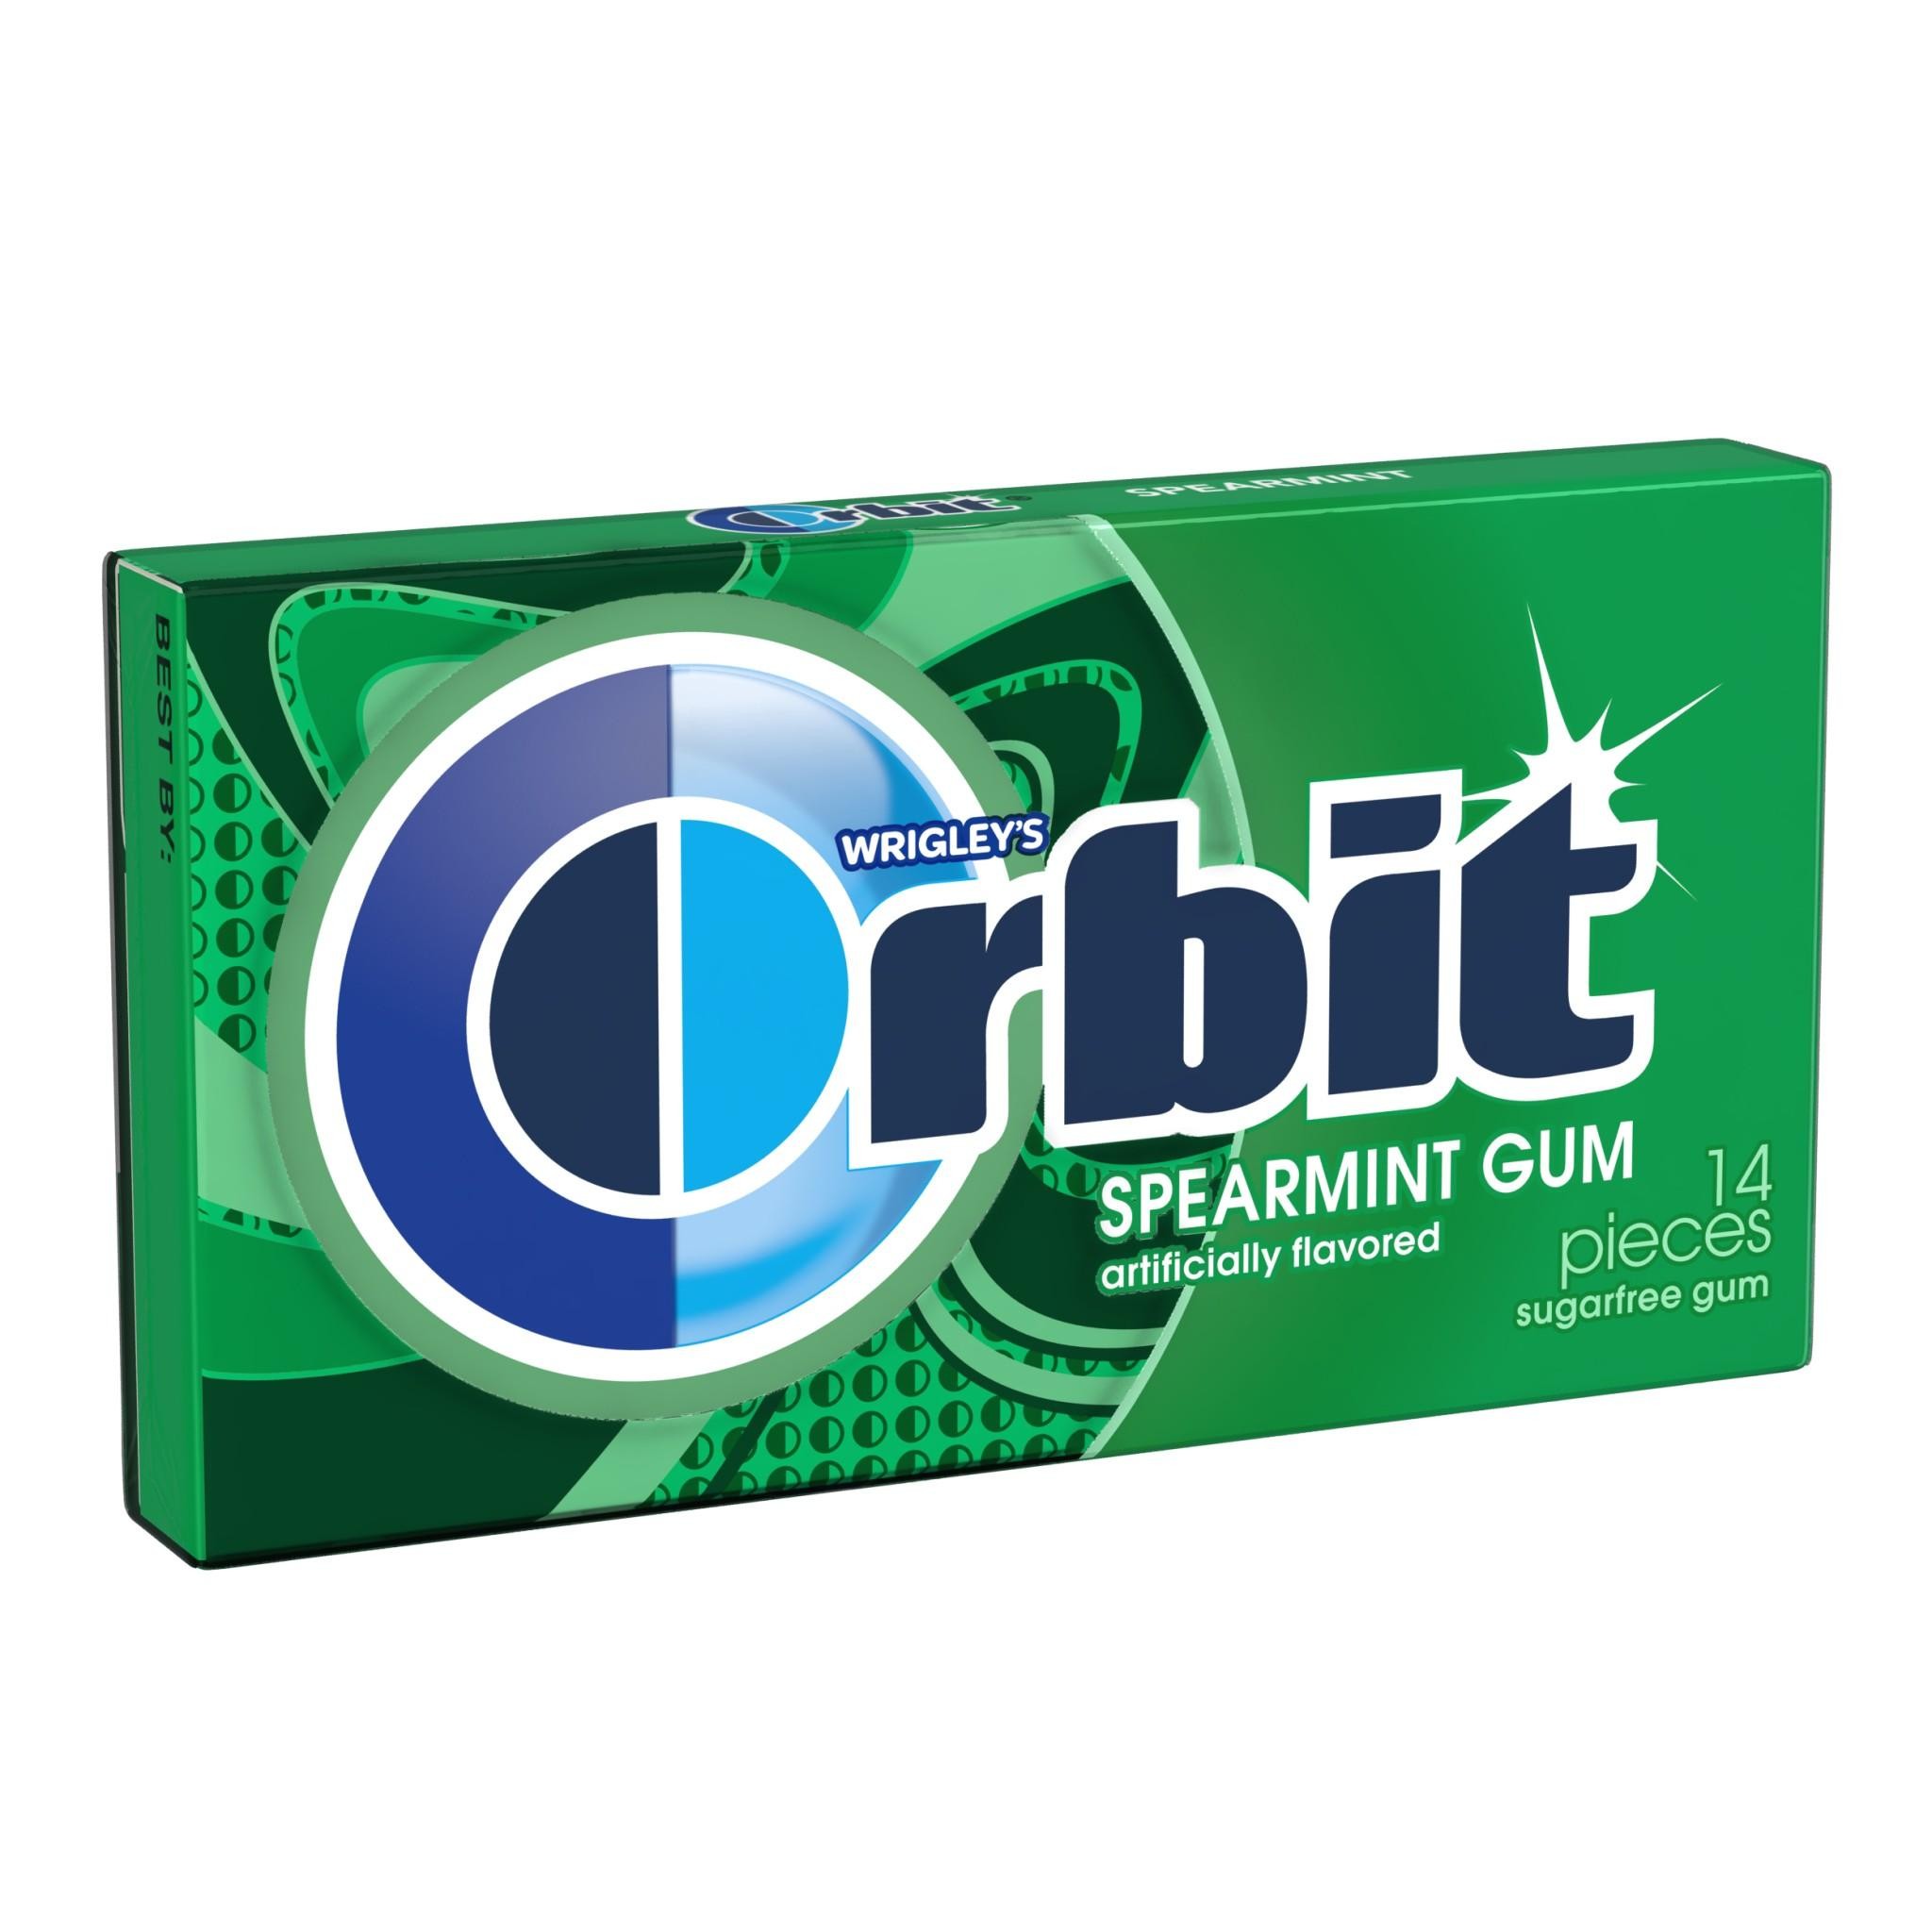 Orbit Gum Spearmint Sugar Free Chewing Gum  Single Pack - 14 Piece